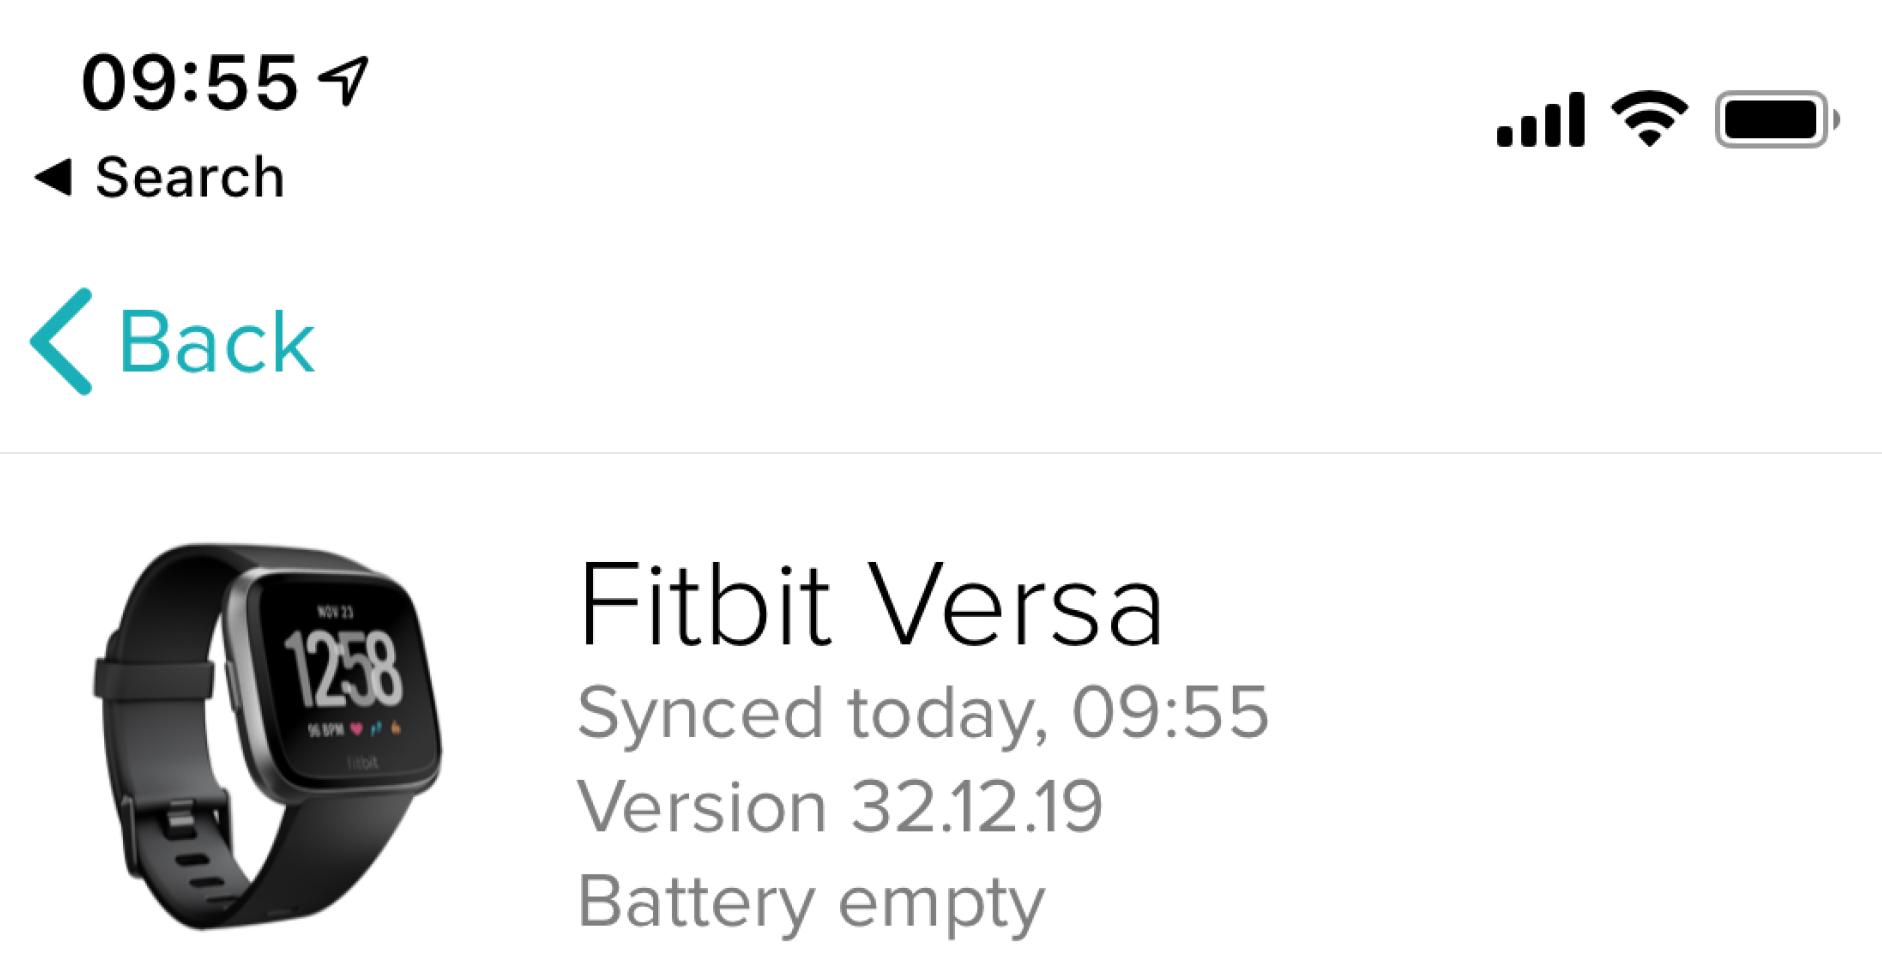 Fitbit OS 2.2 - Versa Firmware Release 